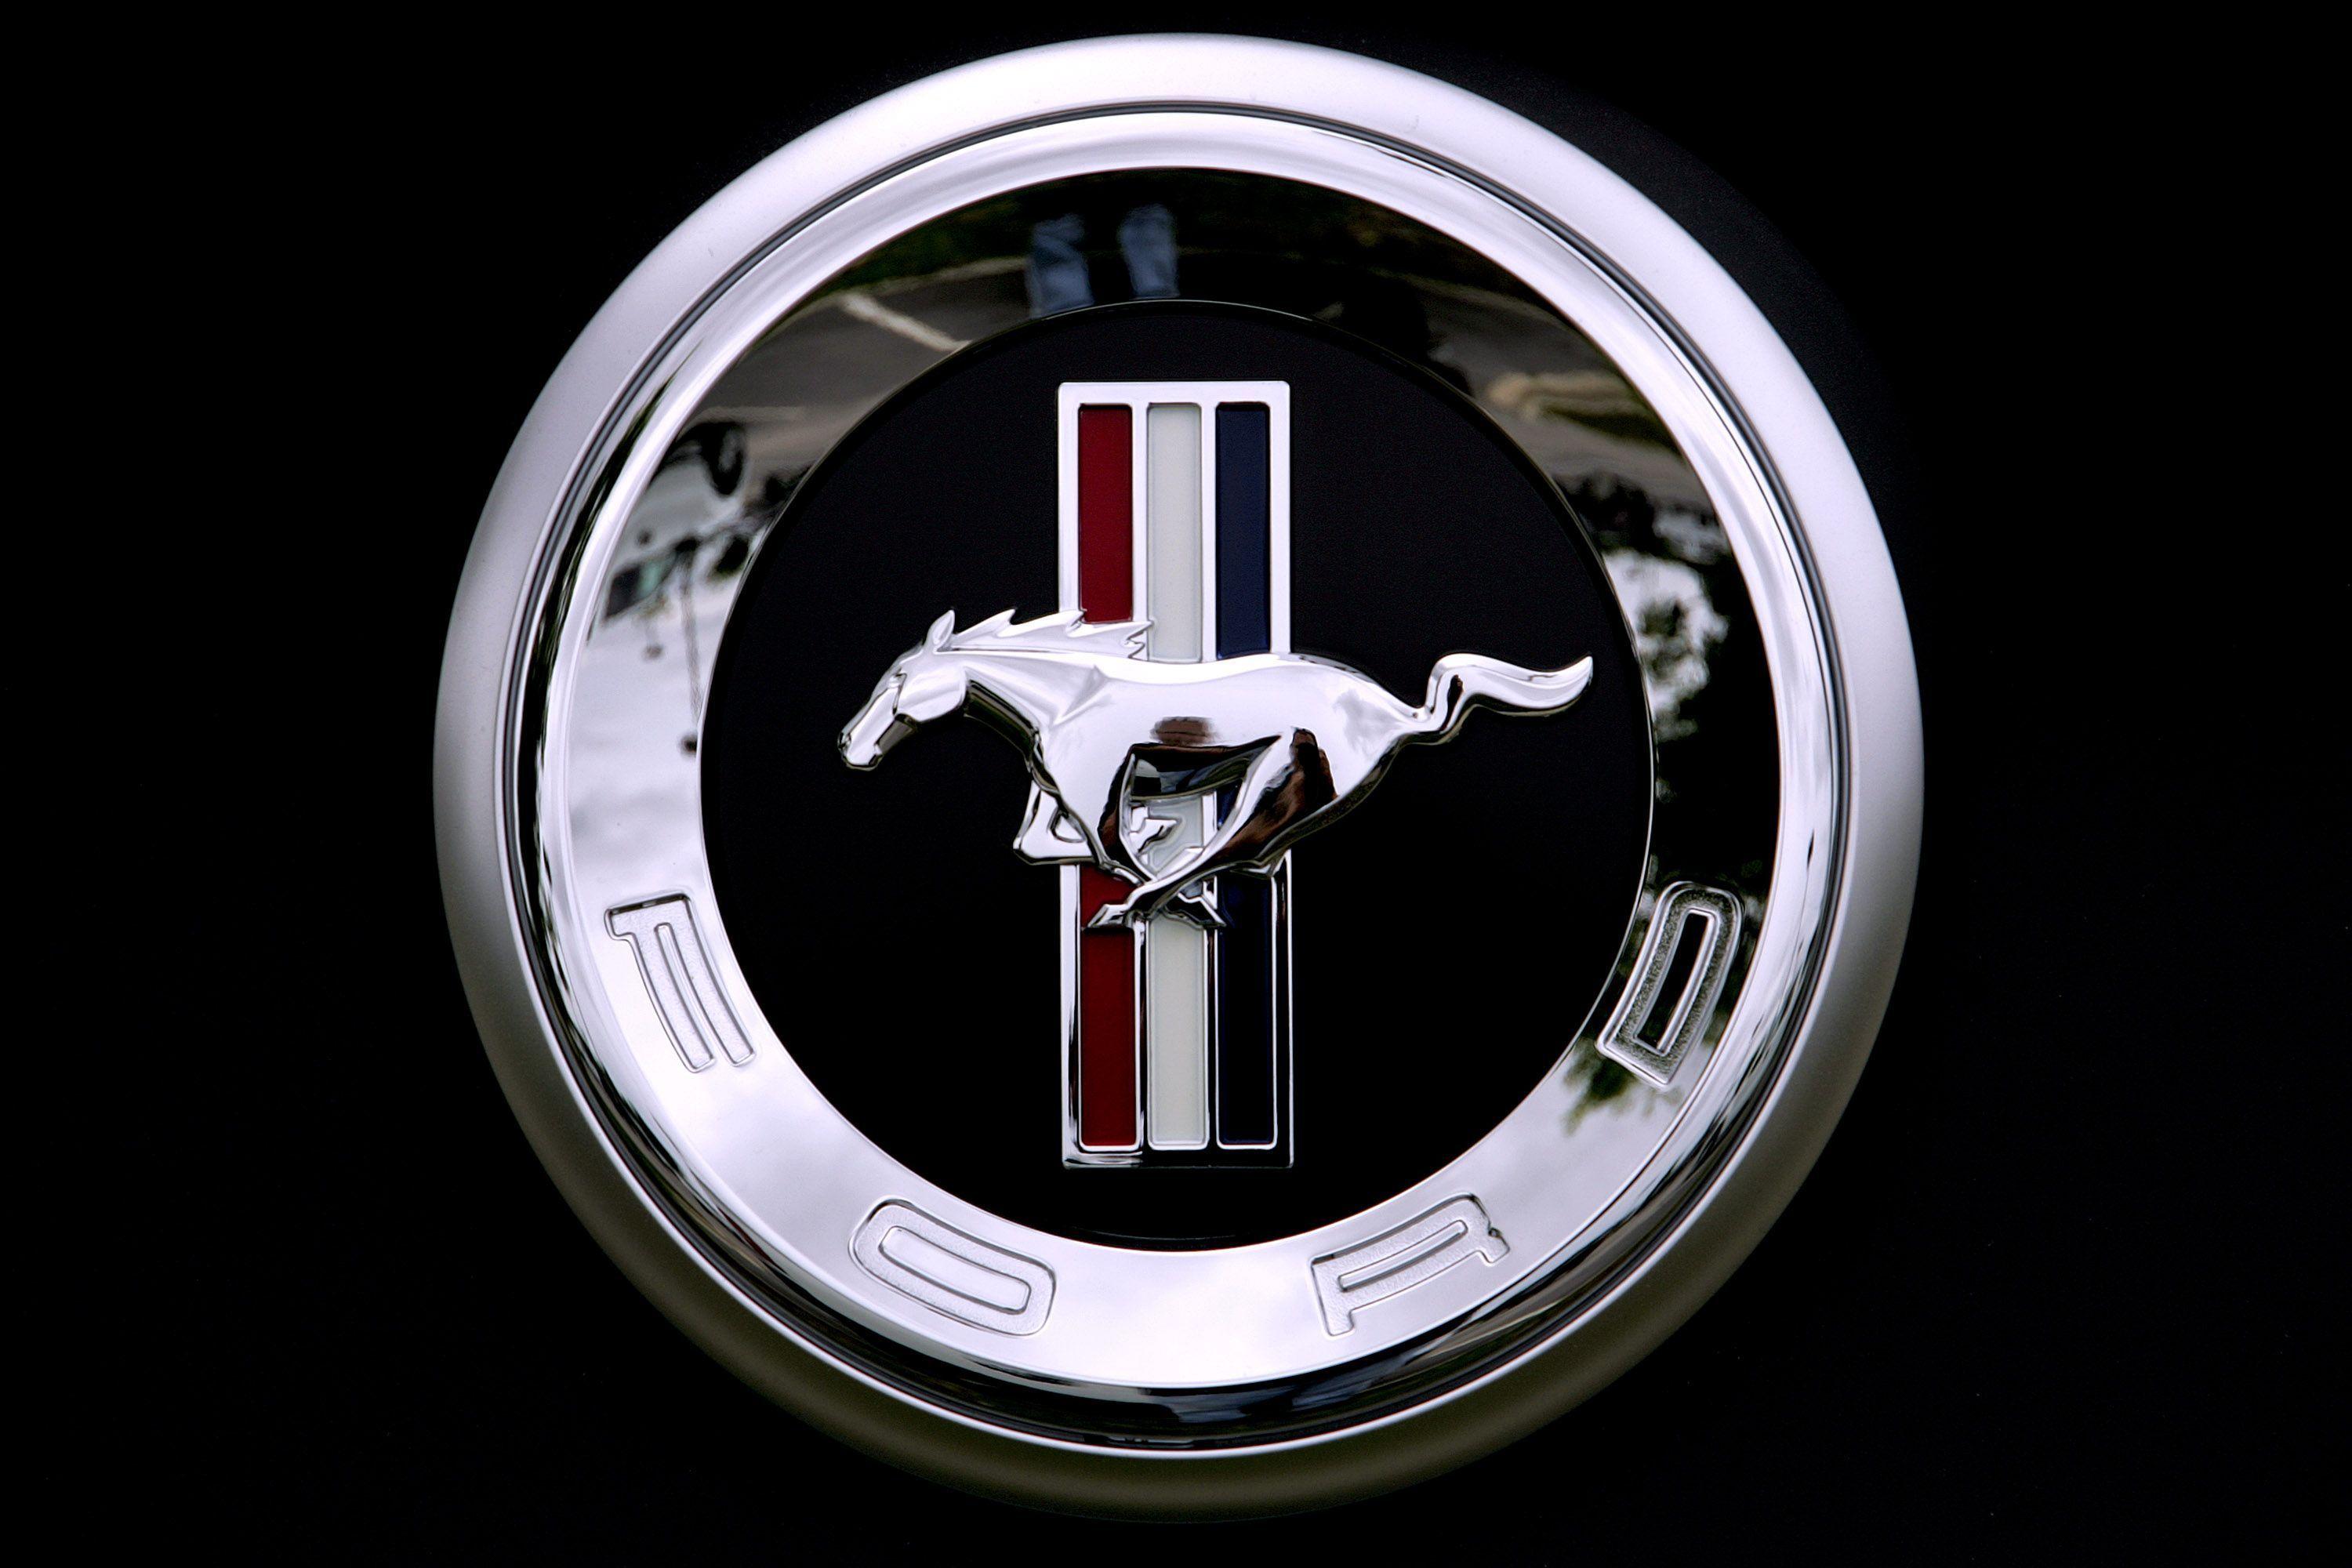 2015 Ford Logo - Mustang Logo Wallpaper Photo #Clx. Cars. Mustang, Ford, Ford mustang